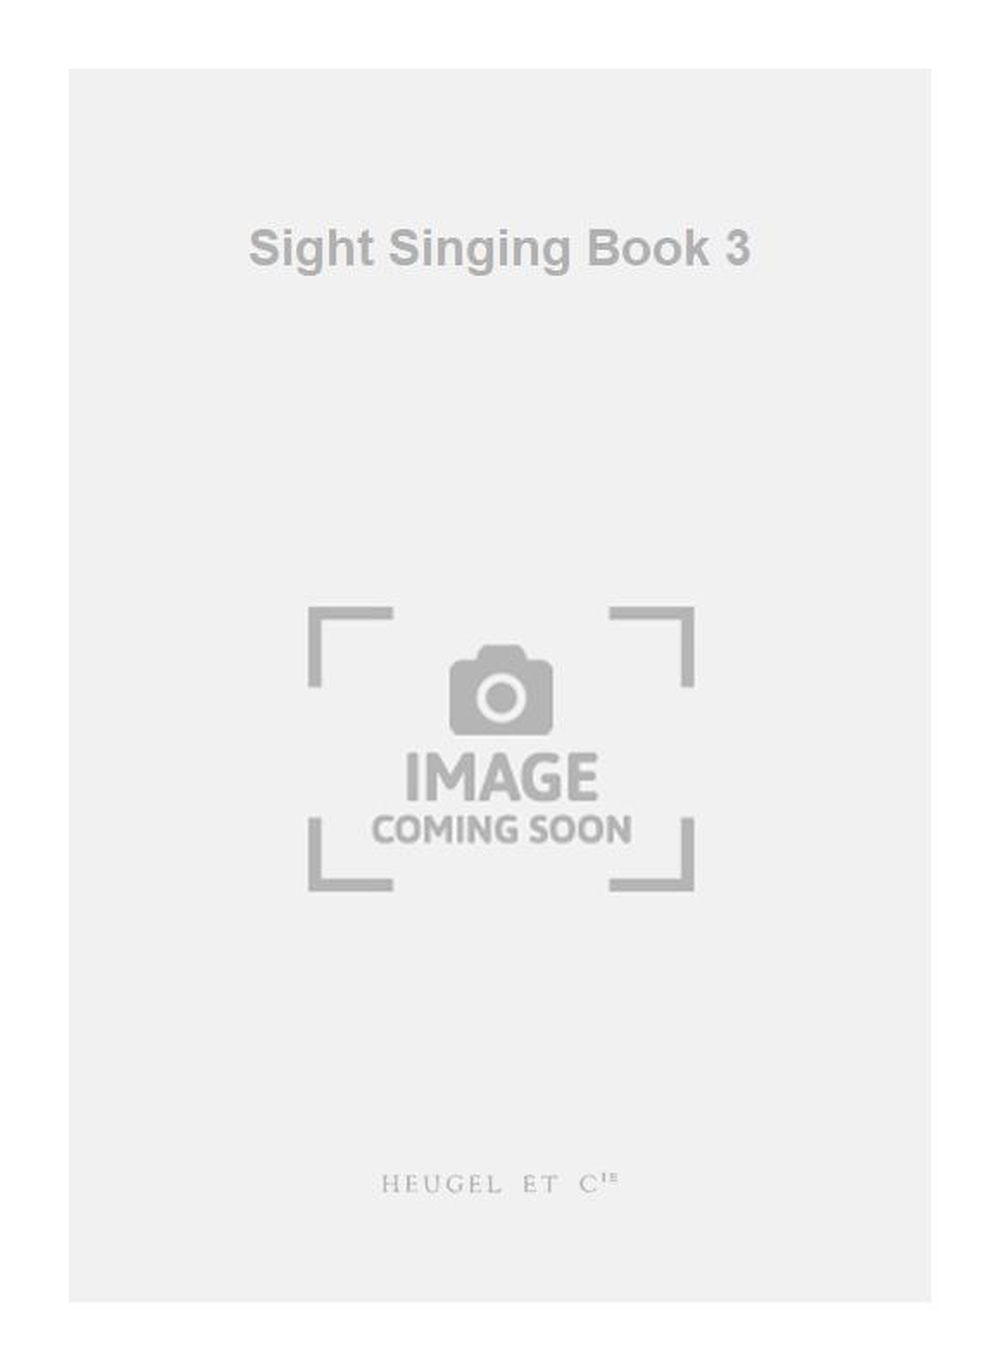 Pittion: Sight Singing Book 3